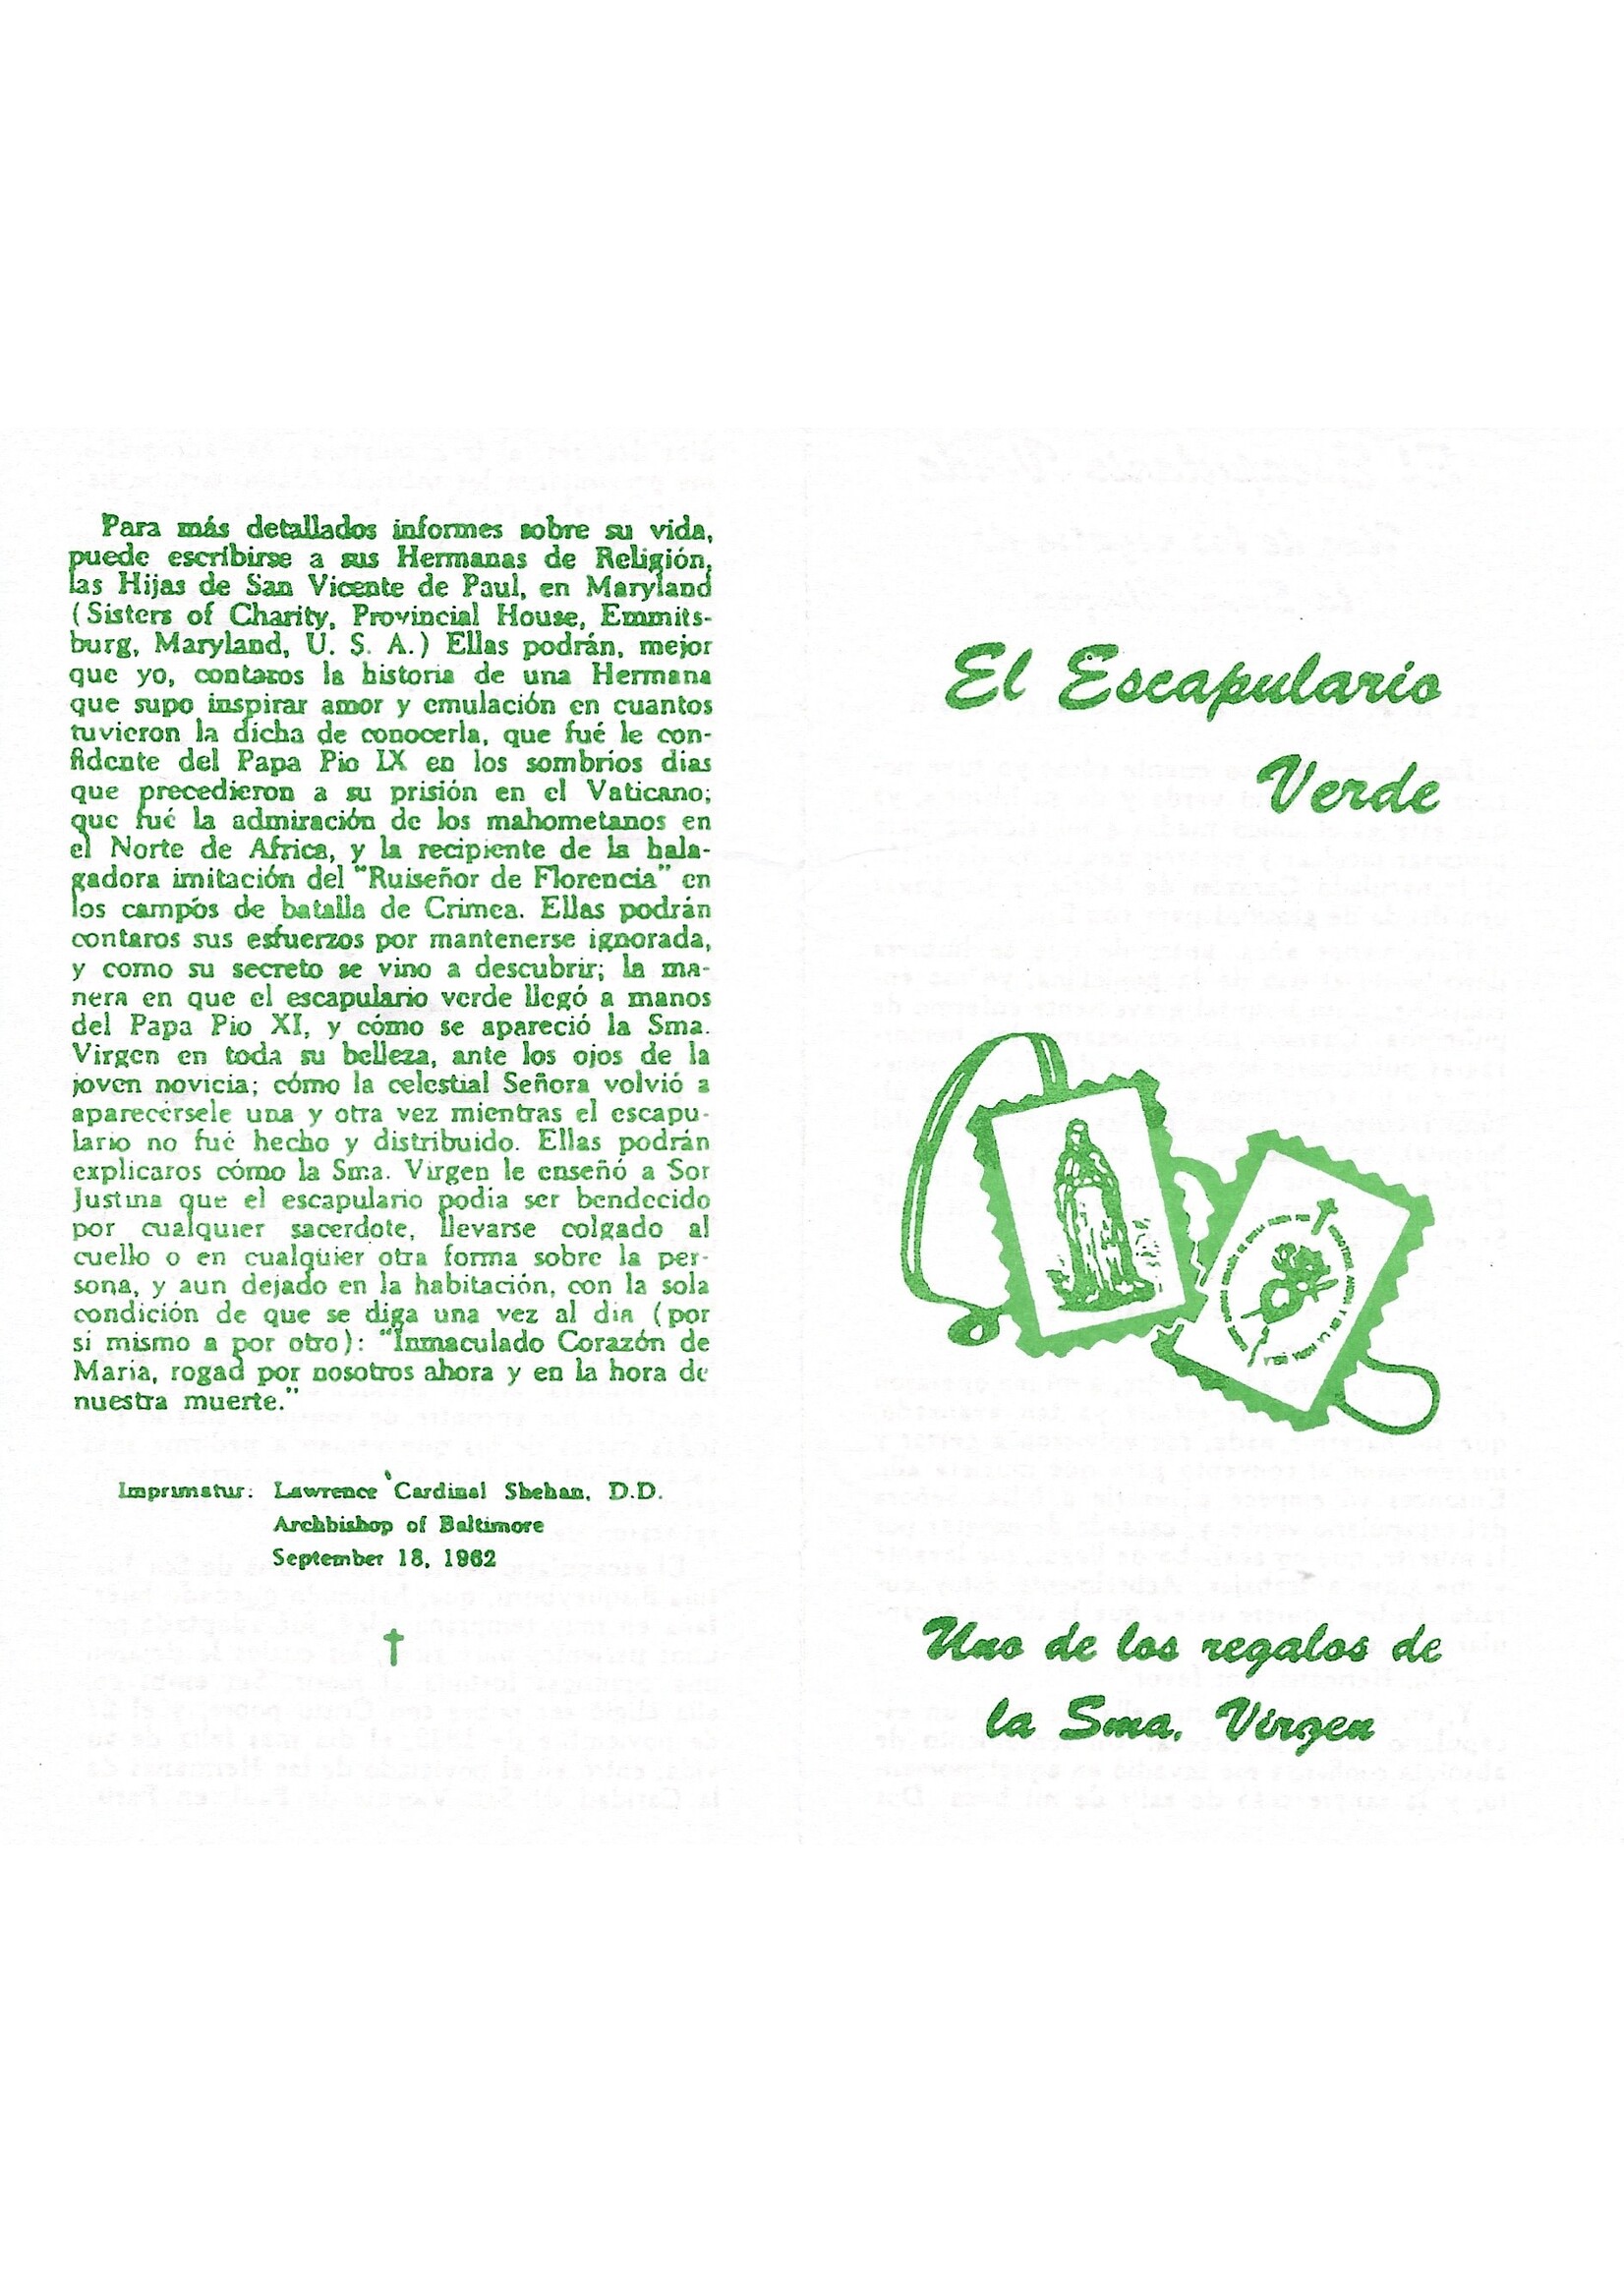 Green Scapular, Spanish